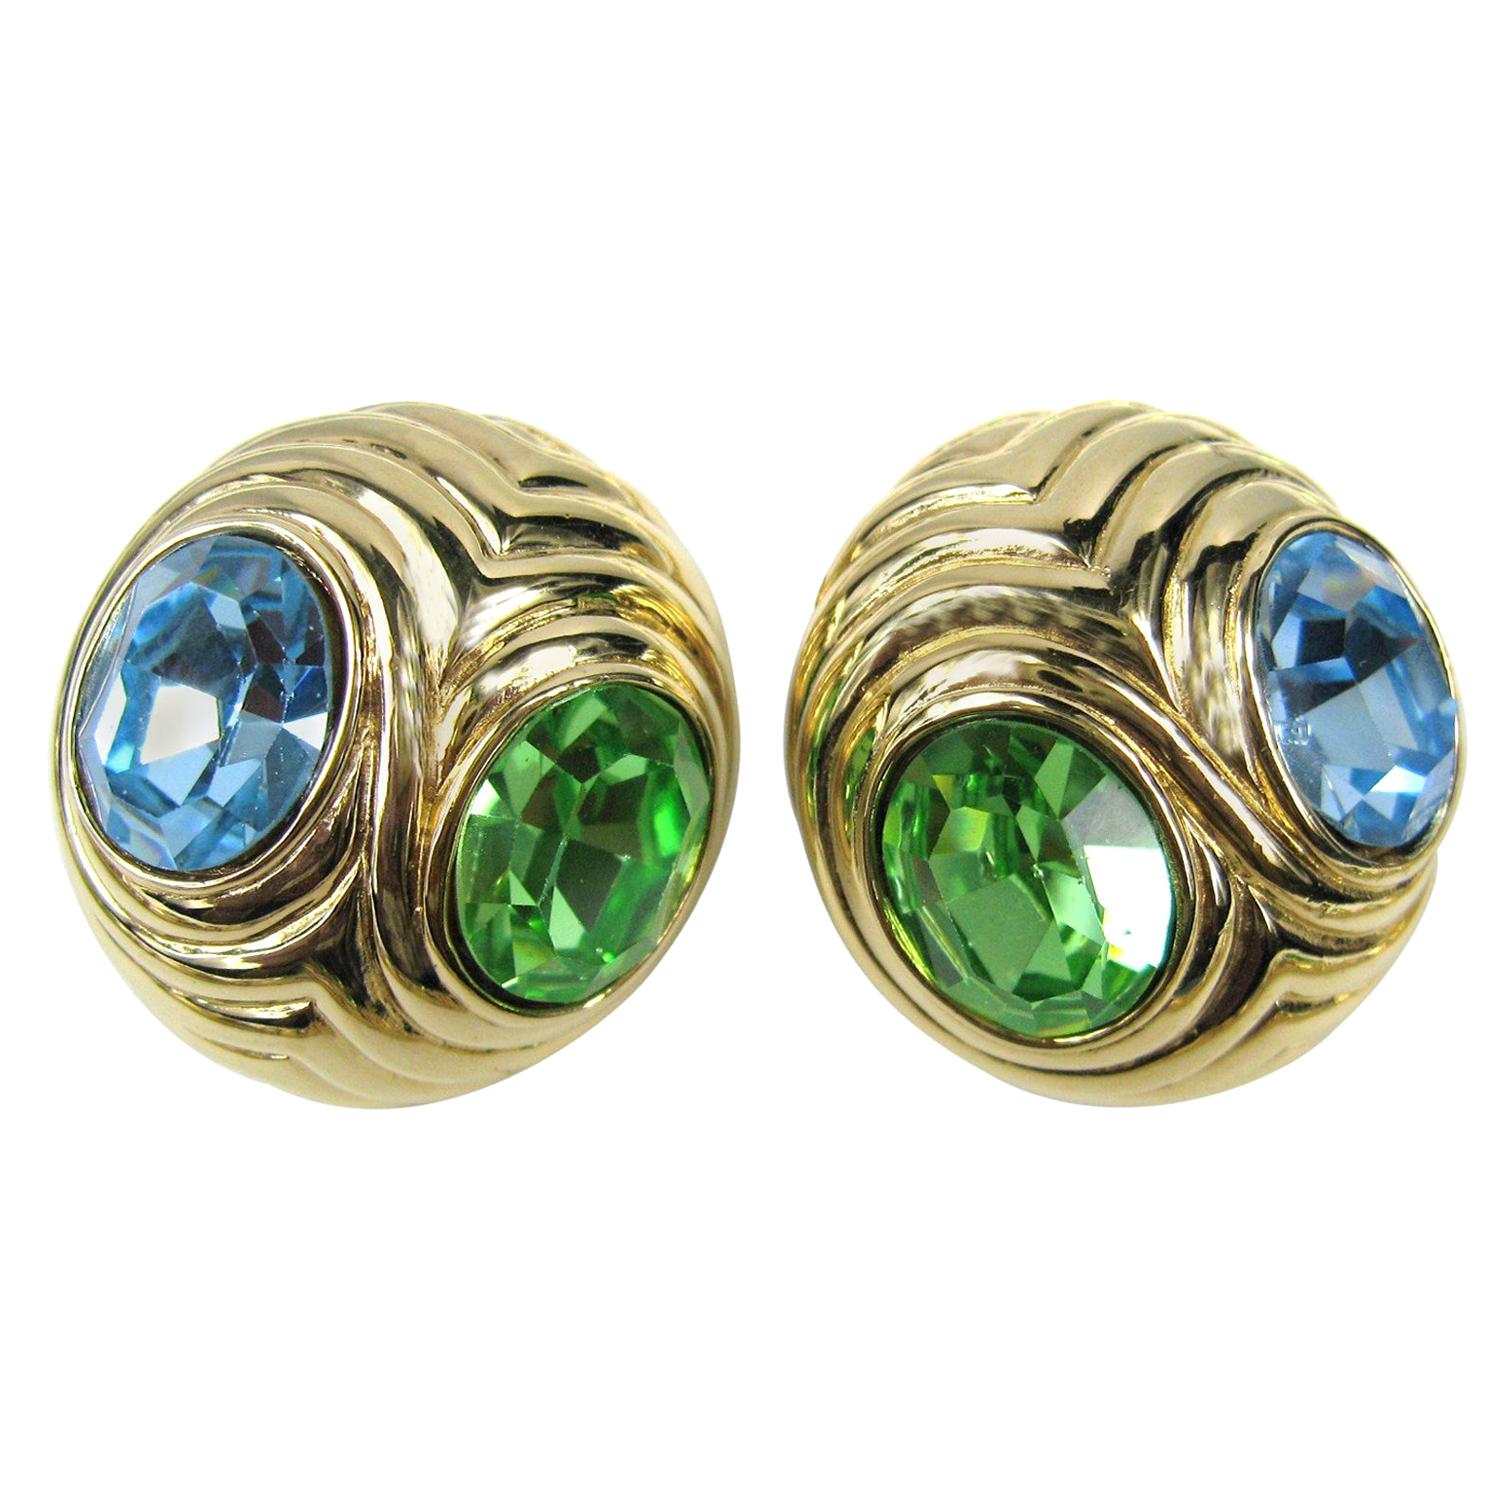  Ciner Earrings Blue & Green Swarovski Crystal New, Never worn  For Sale